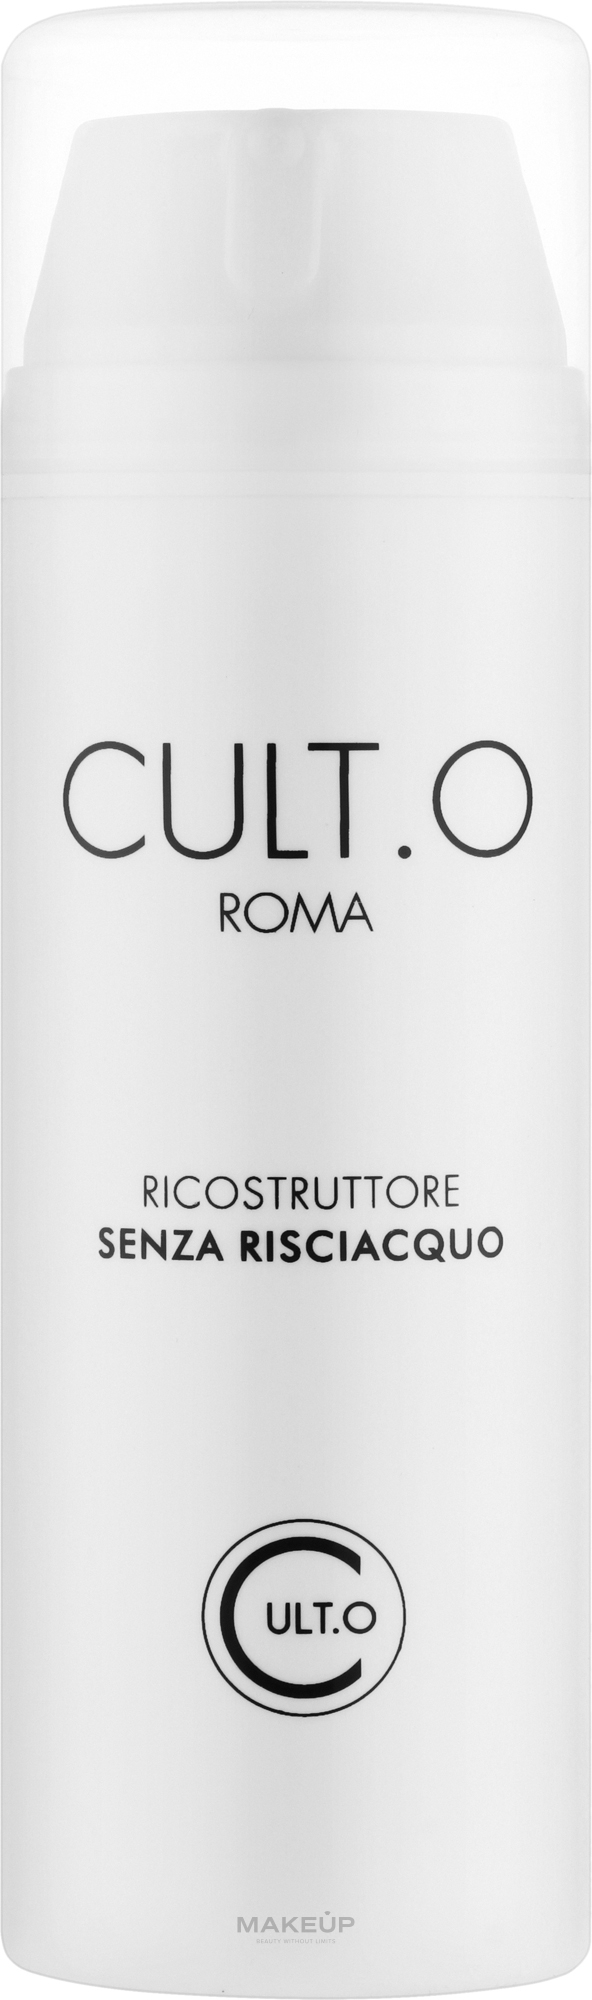 Крем для об'єму волосся - Cult.O Roma Crema Voumizante Senza Risciacquo — фото 150ml